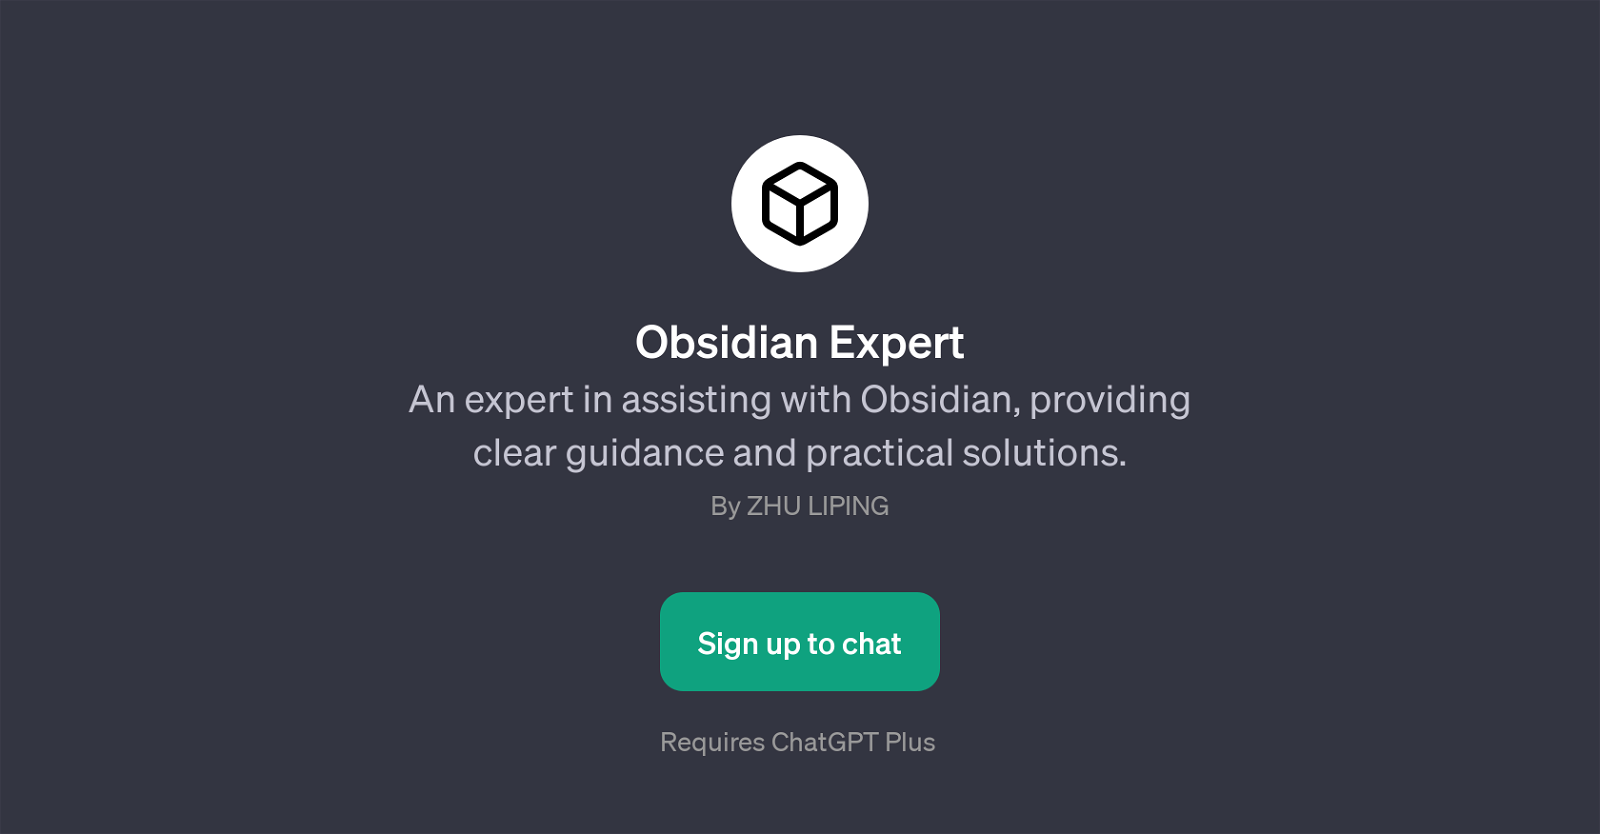 Obsidian Expert website